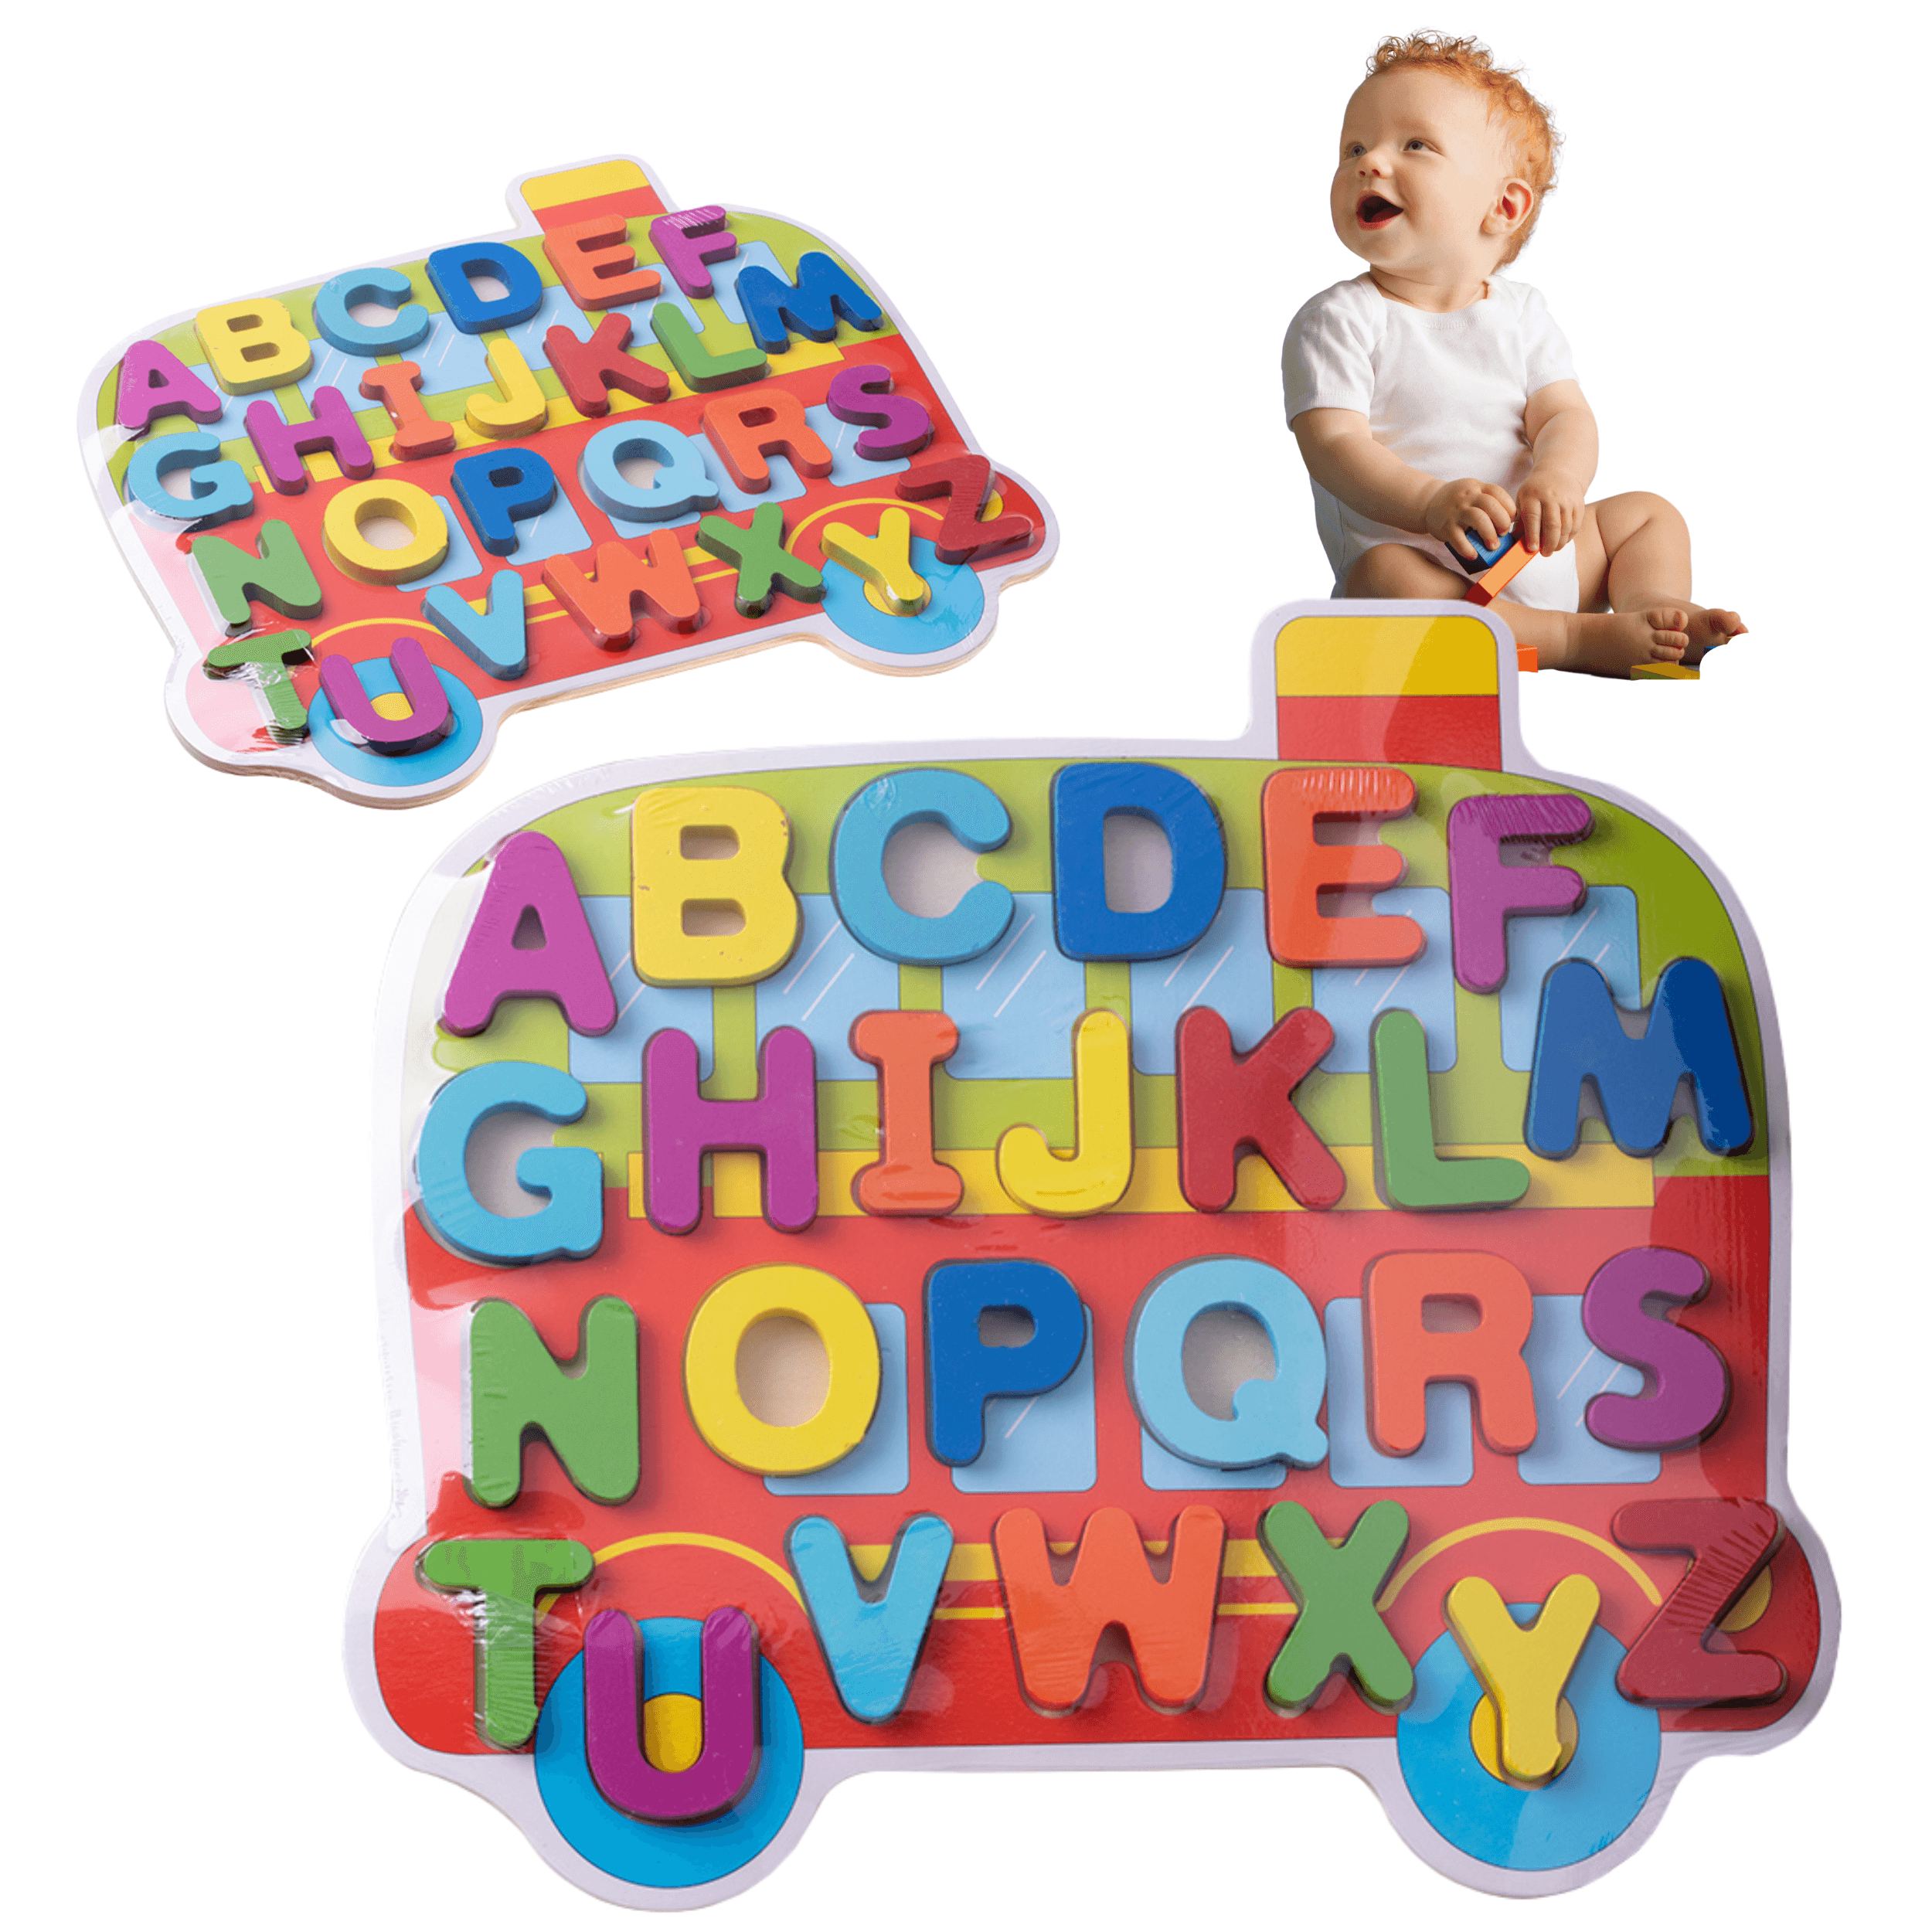 Puzzle for children "Letters"